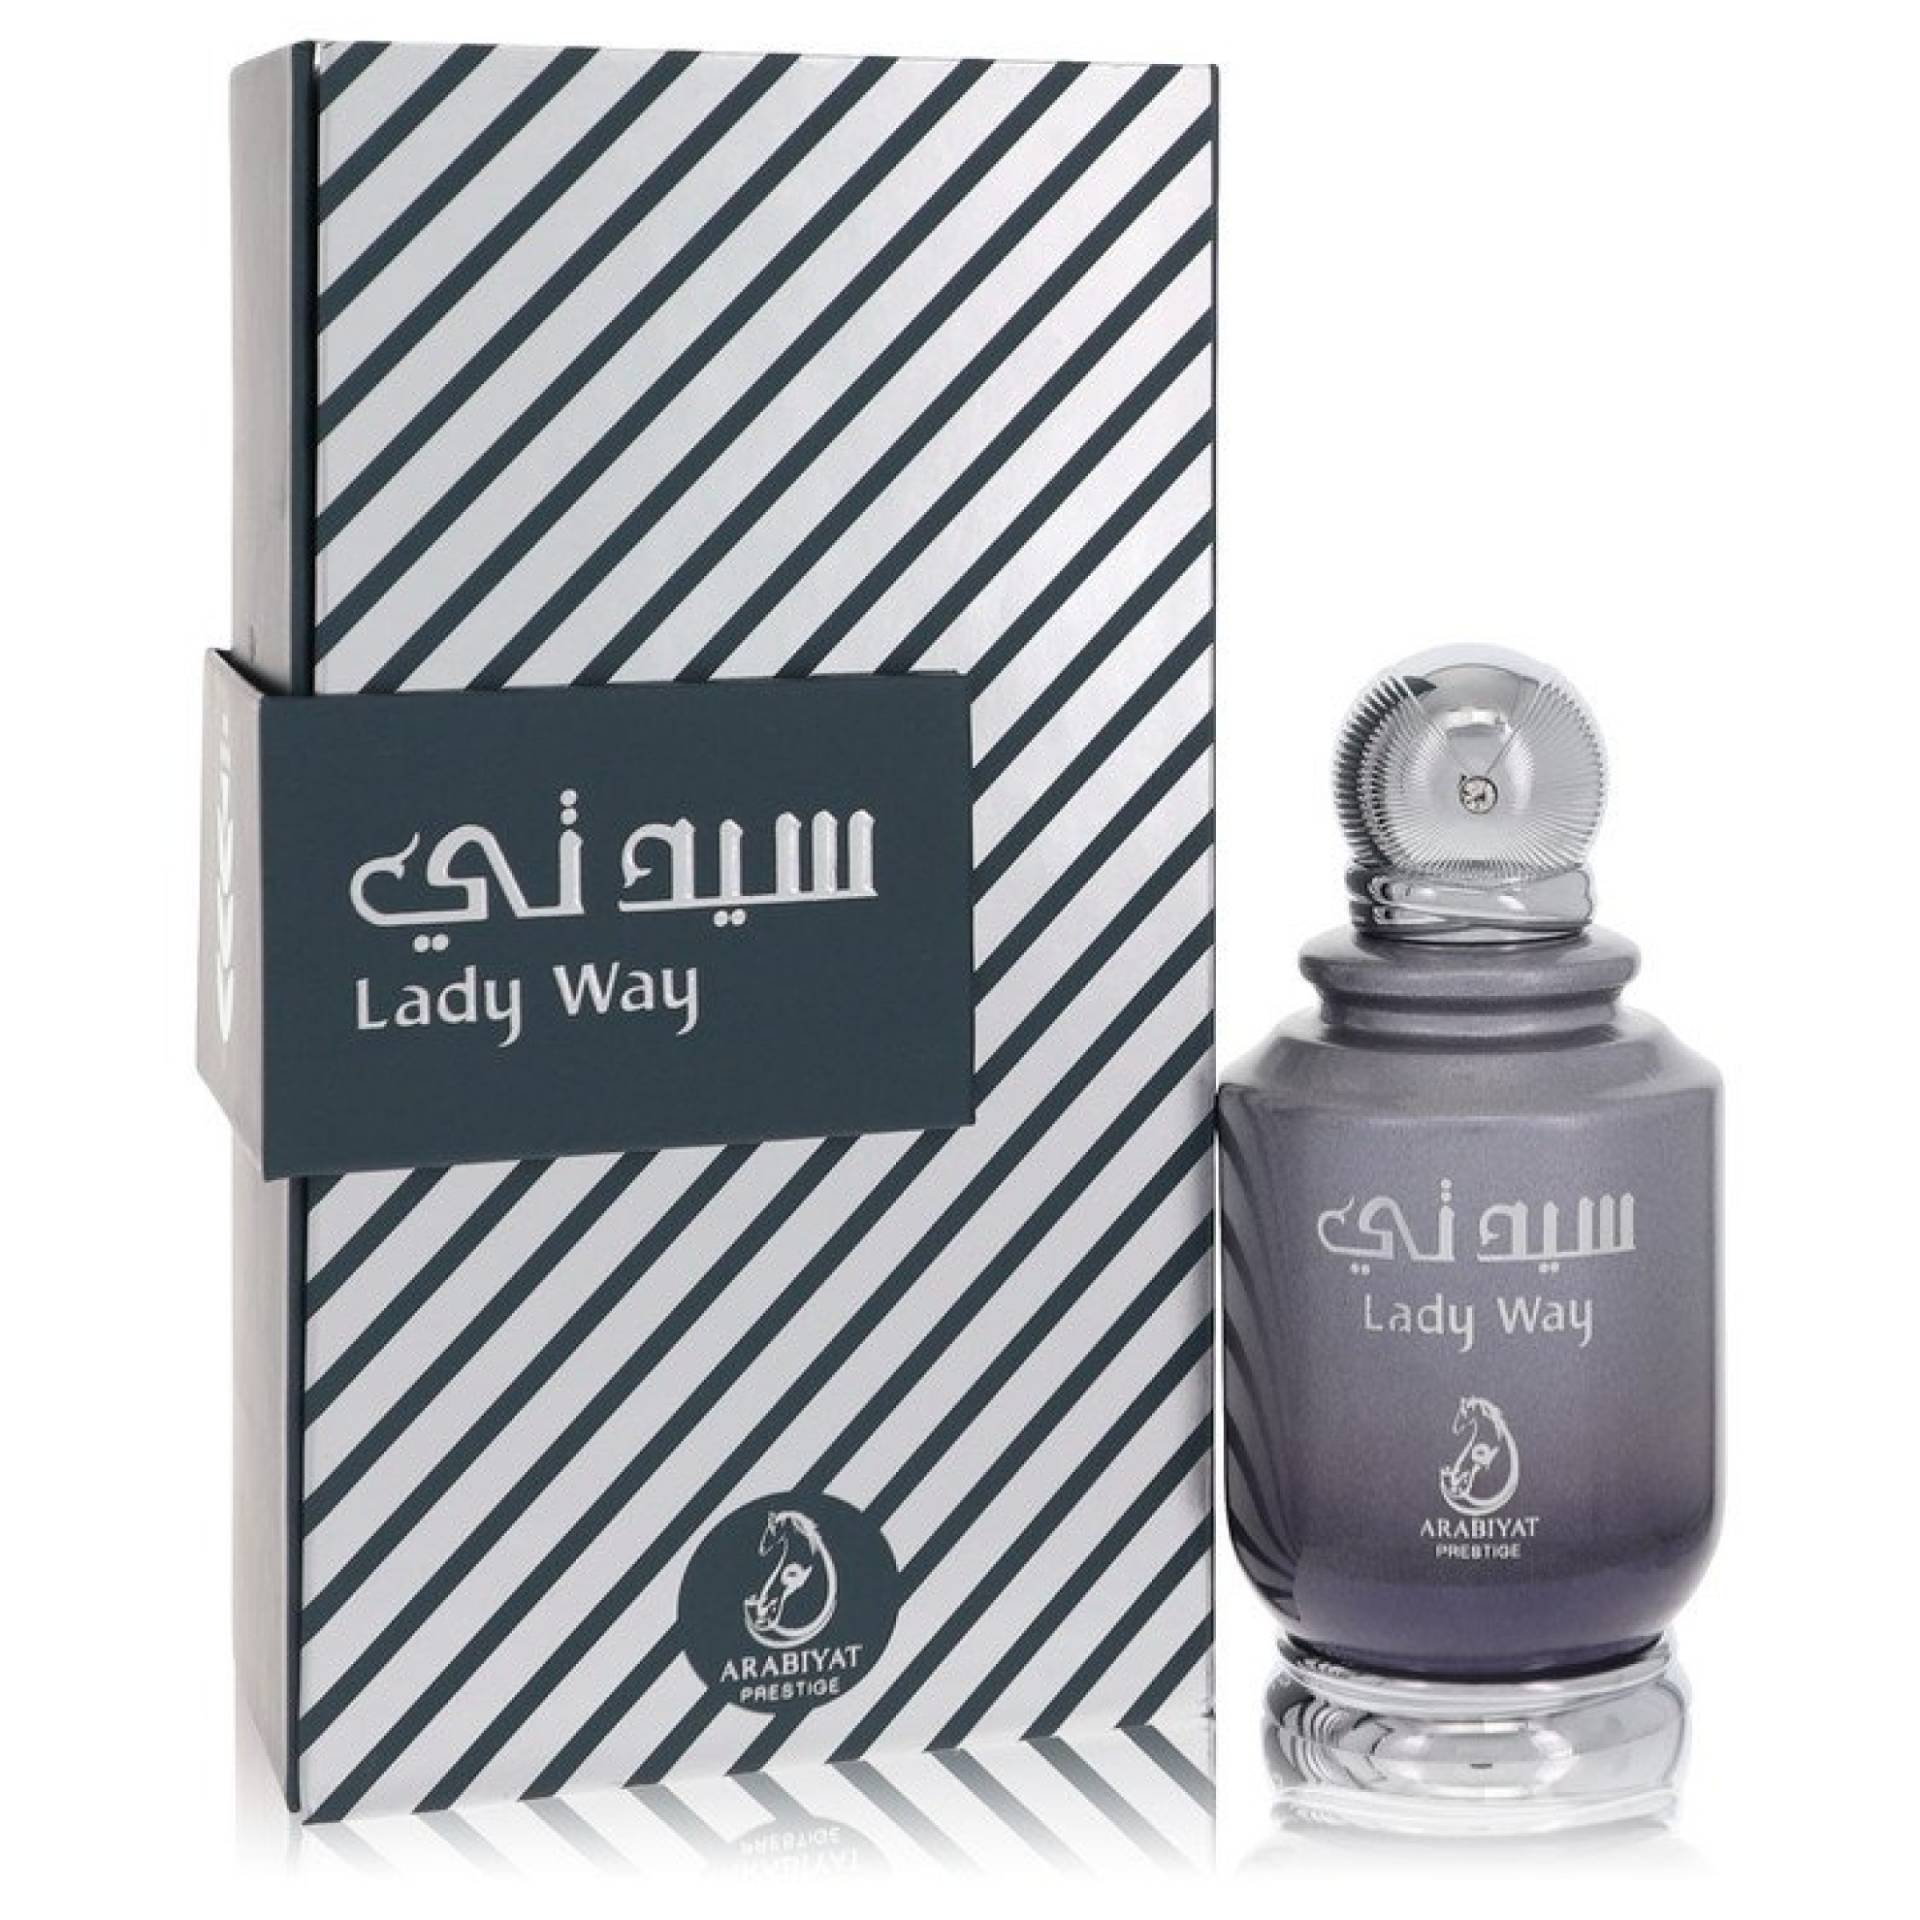 Arabiyat Prestige Lady Way Eau De Parfum Spray 100 ml von Arabiyat Prestige